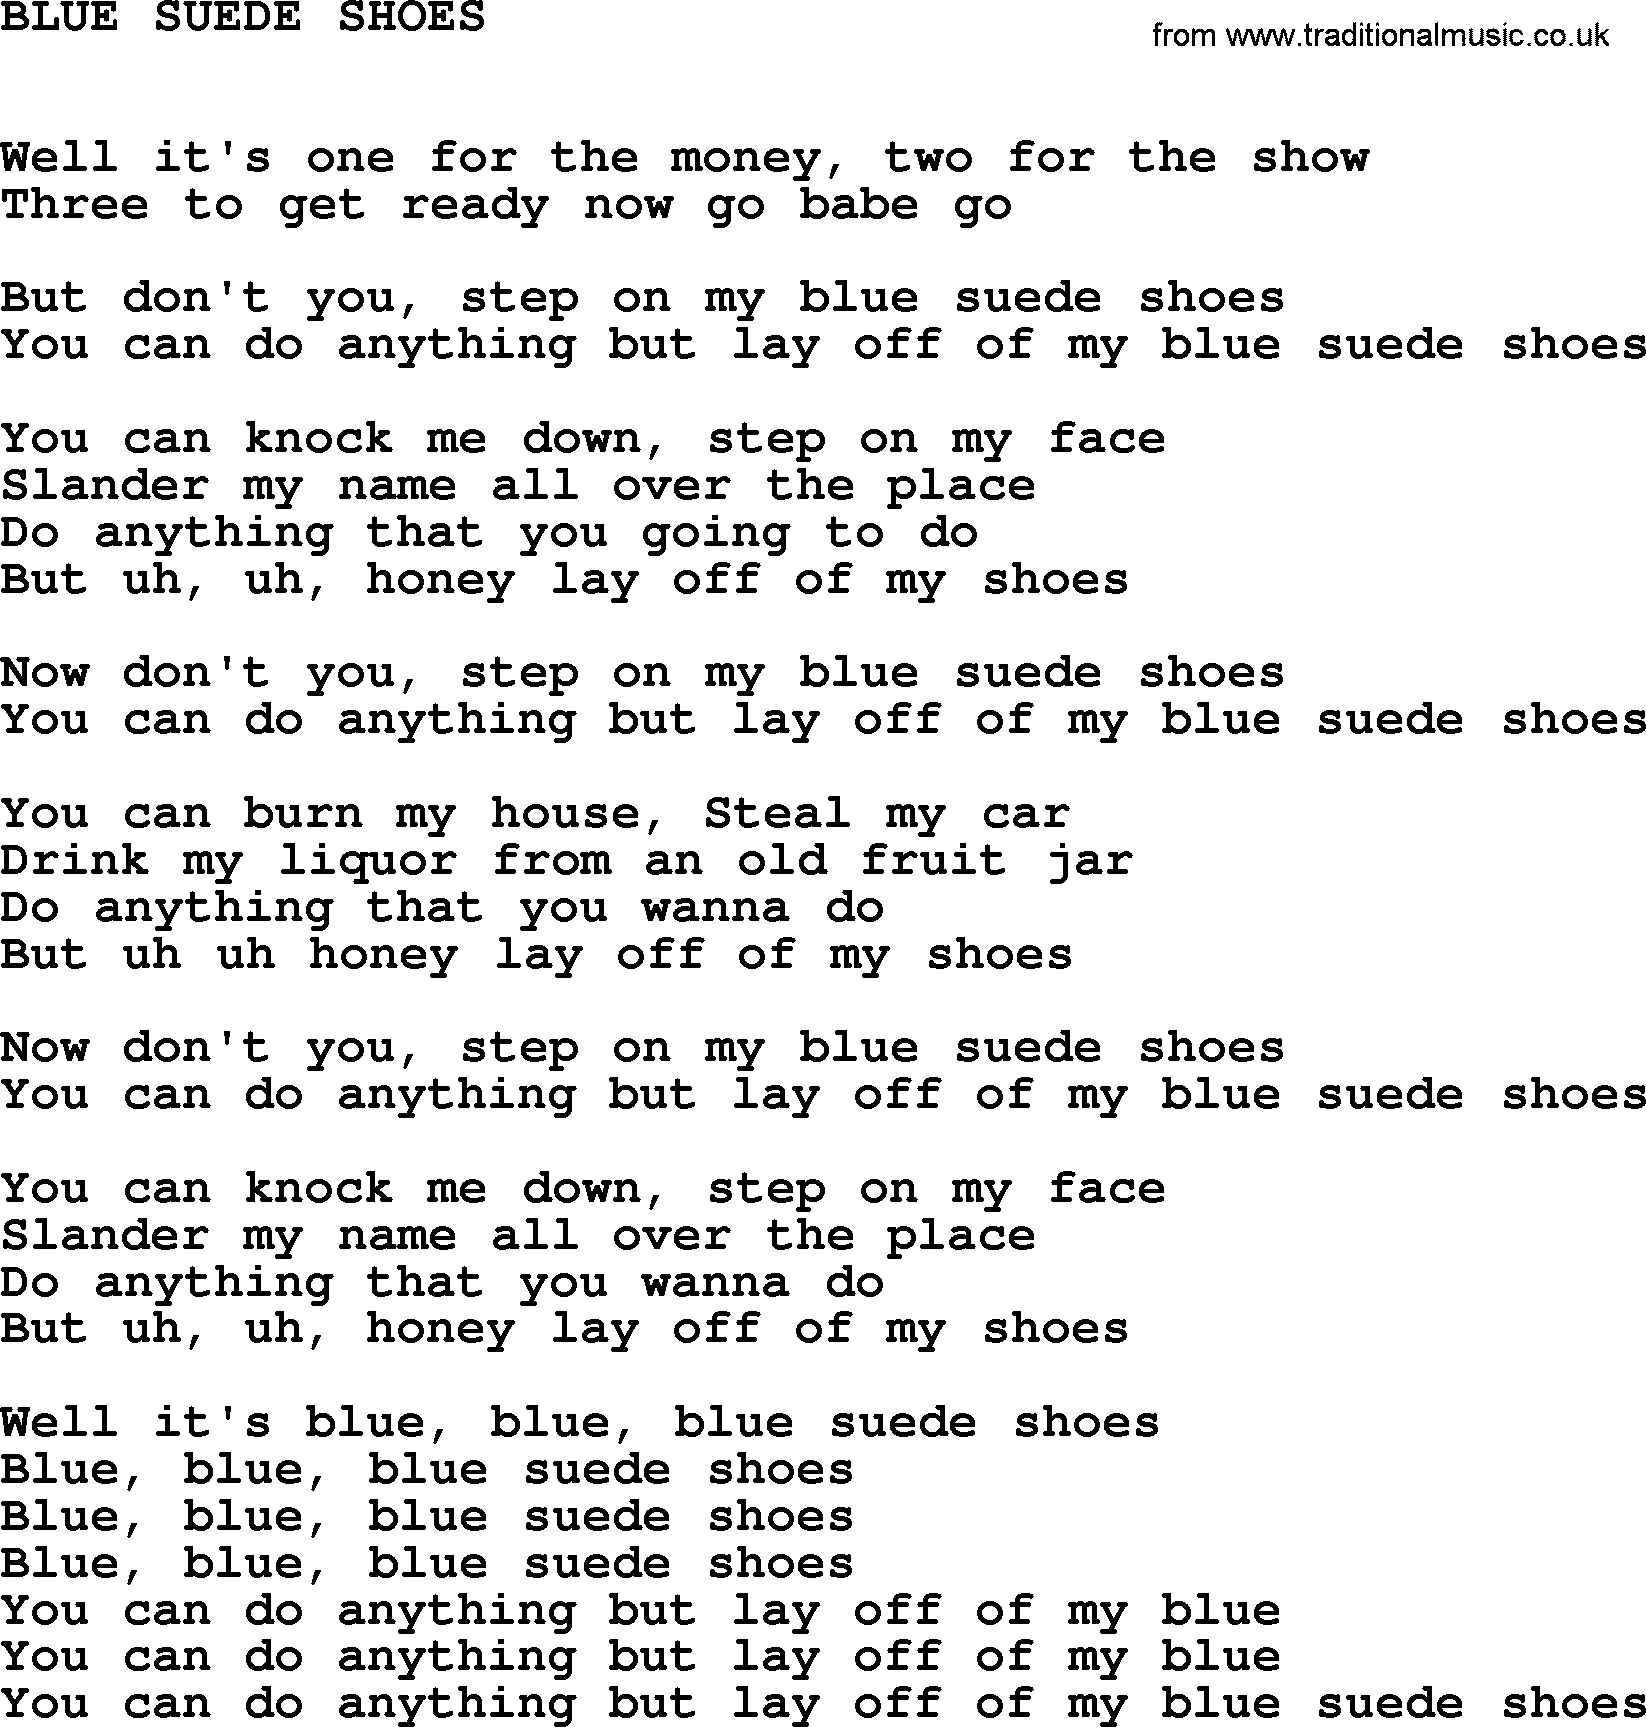 Johnny Cash song Blue Suede Shoes.txt lyrics